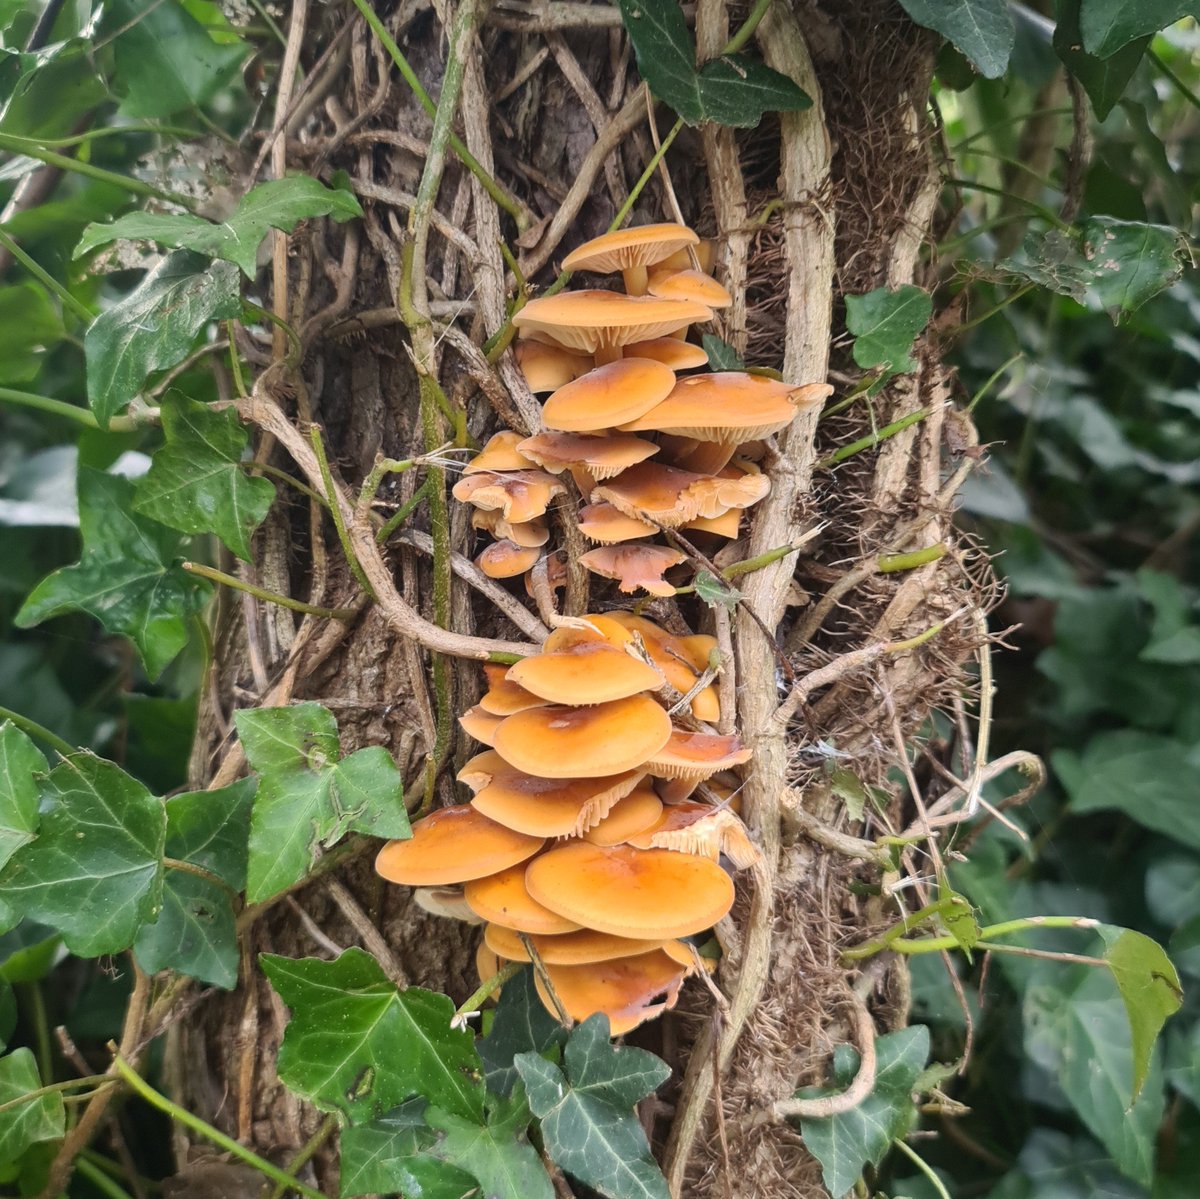 Velvet Shank #fungi at Bowling Green Marsh this week. 
#FridayFungi